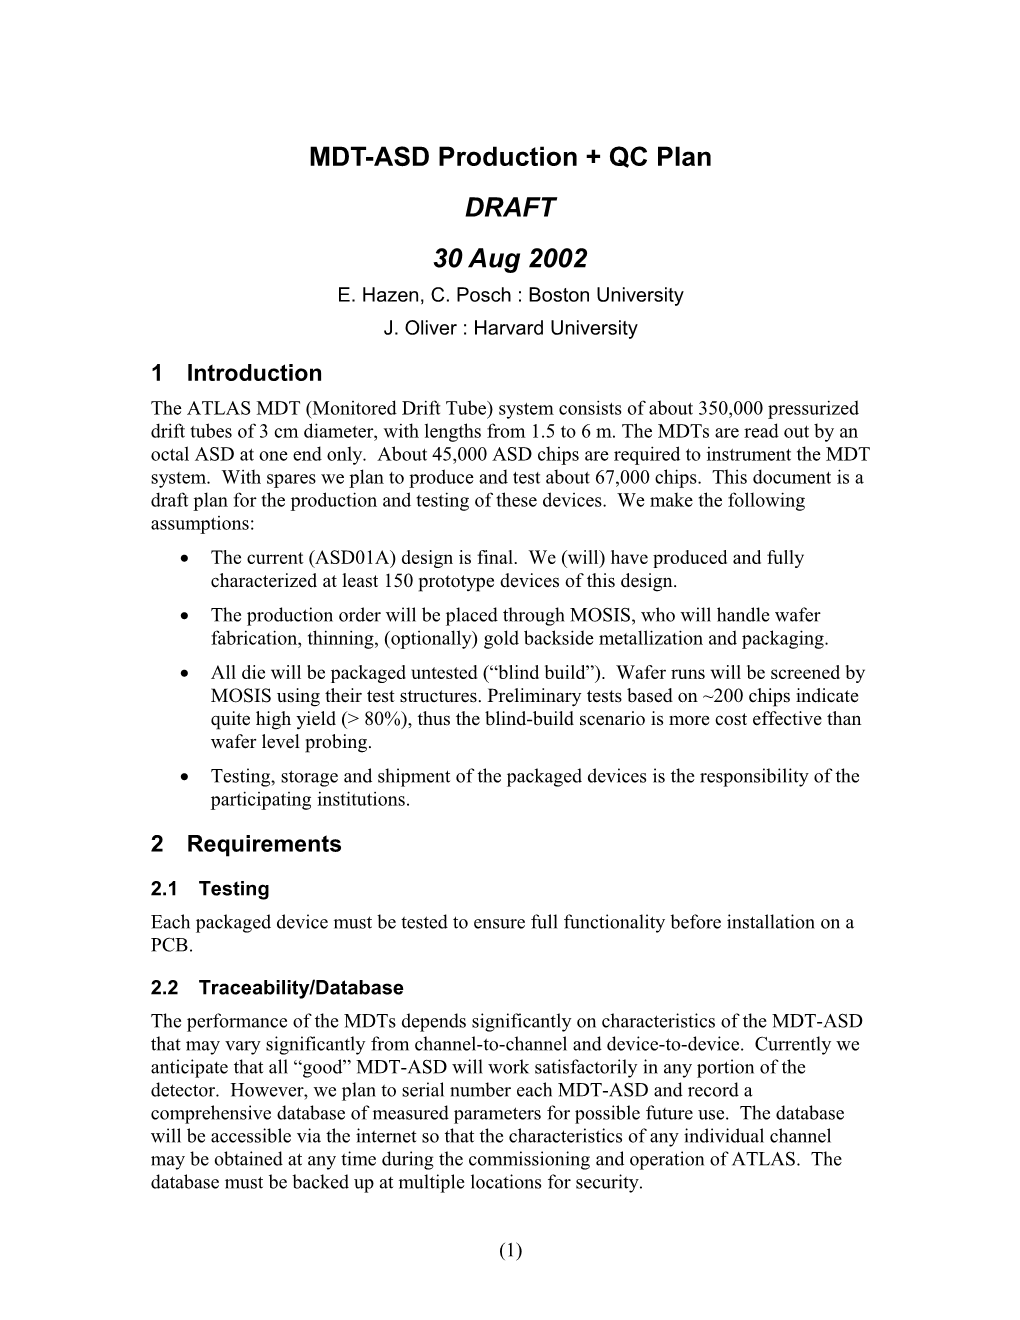 MDT-ASD Production Plan DRAFT